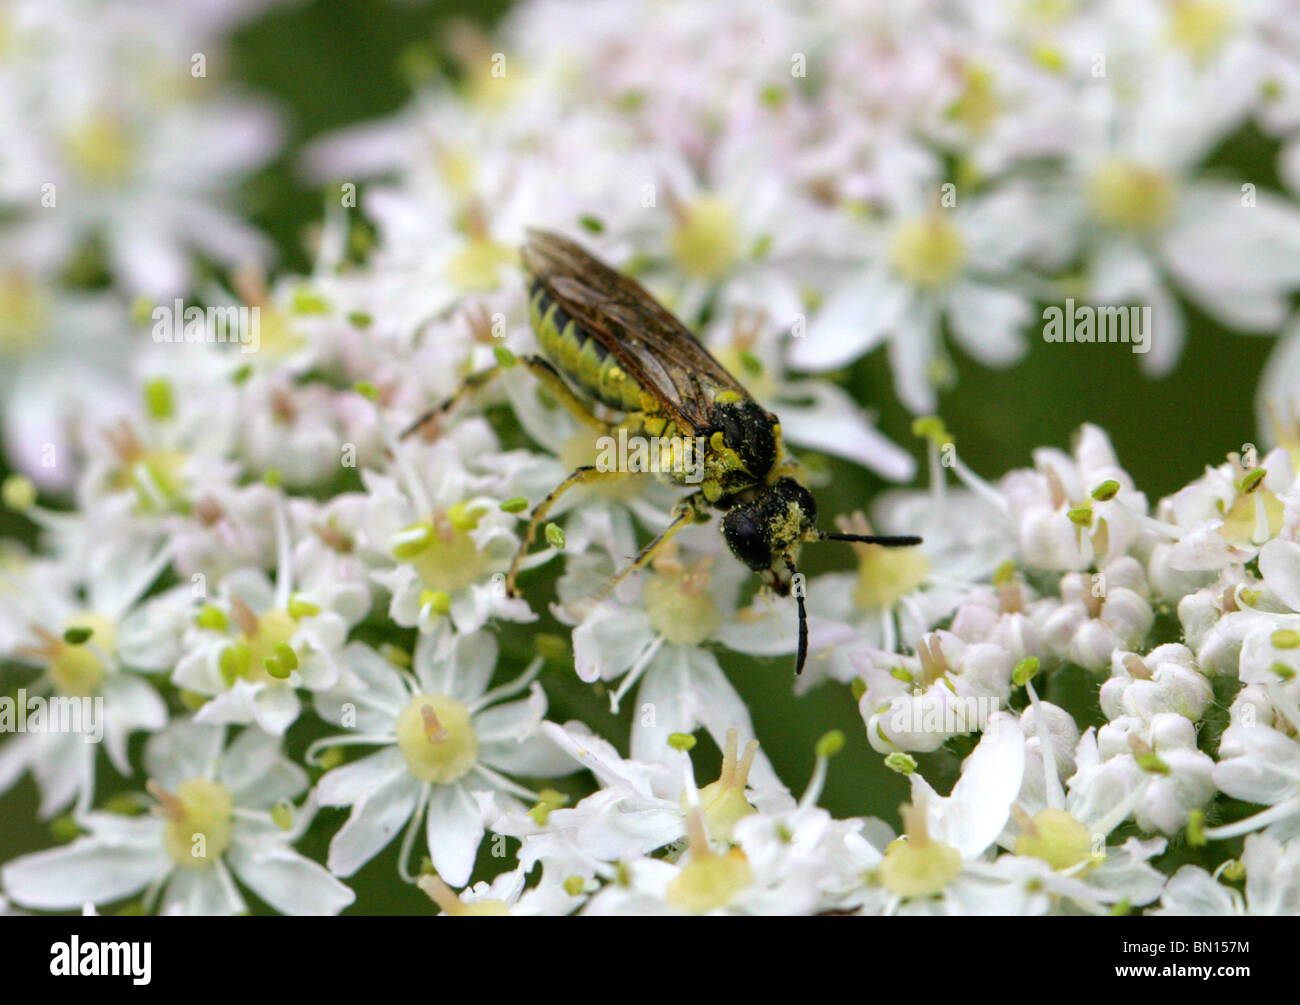 Sawfly, Tenthredo sp. (probably either Tenthredo notha, arcuata or brevicornis), Tenthredinidae, Hymenoptera. Feeding on Hogweed Stock Photo